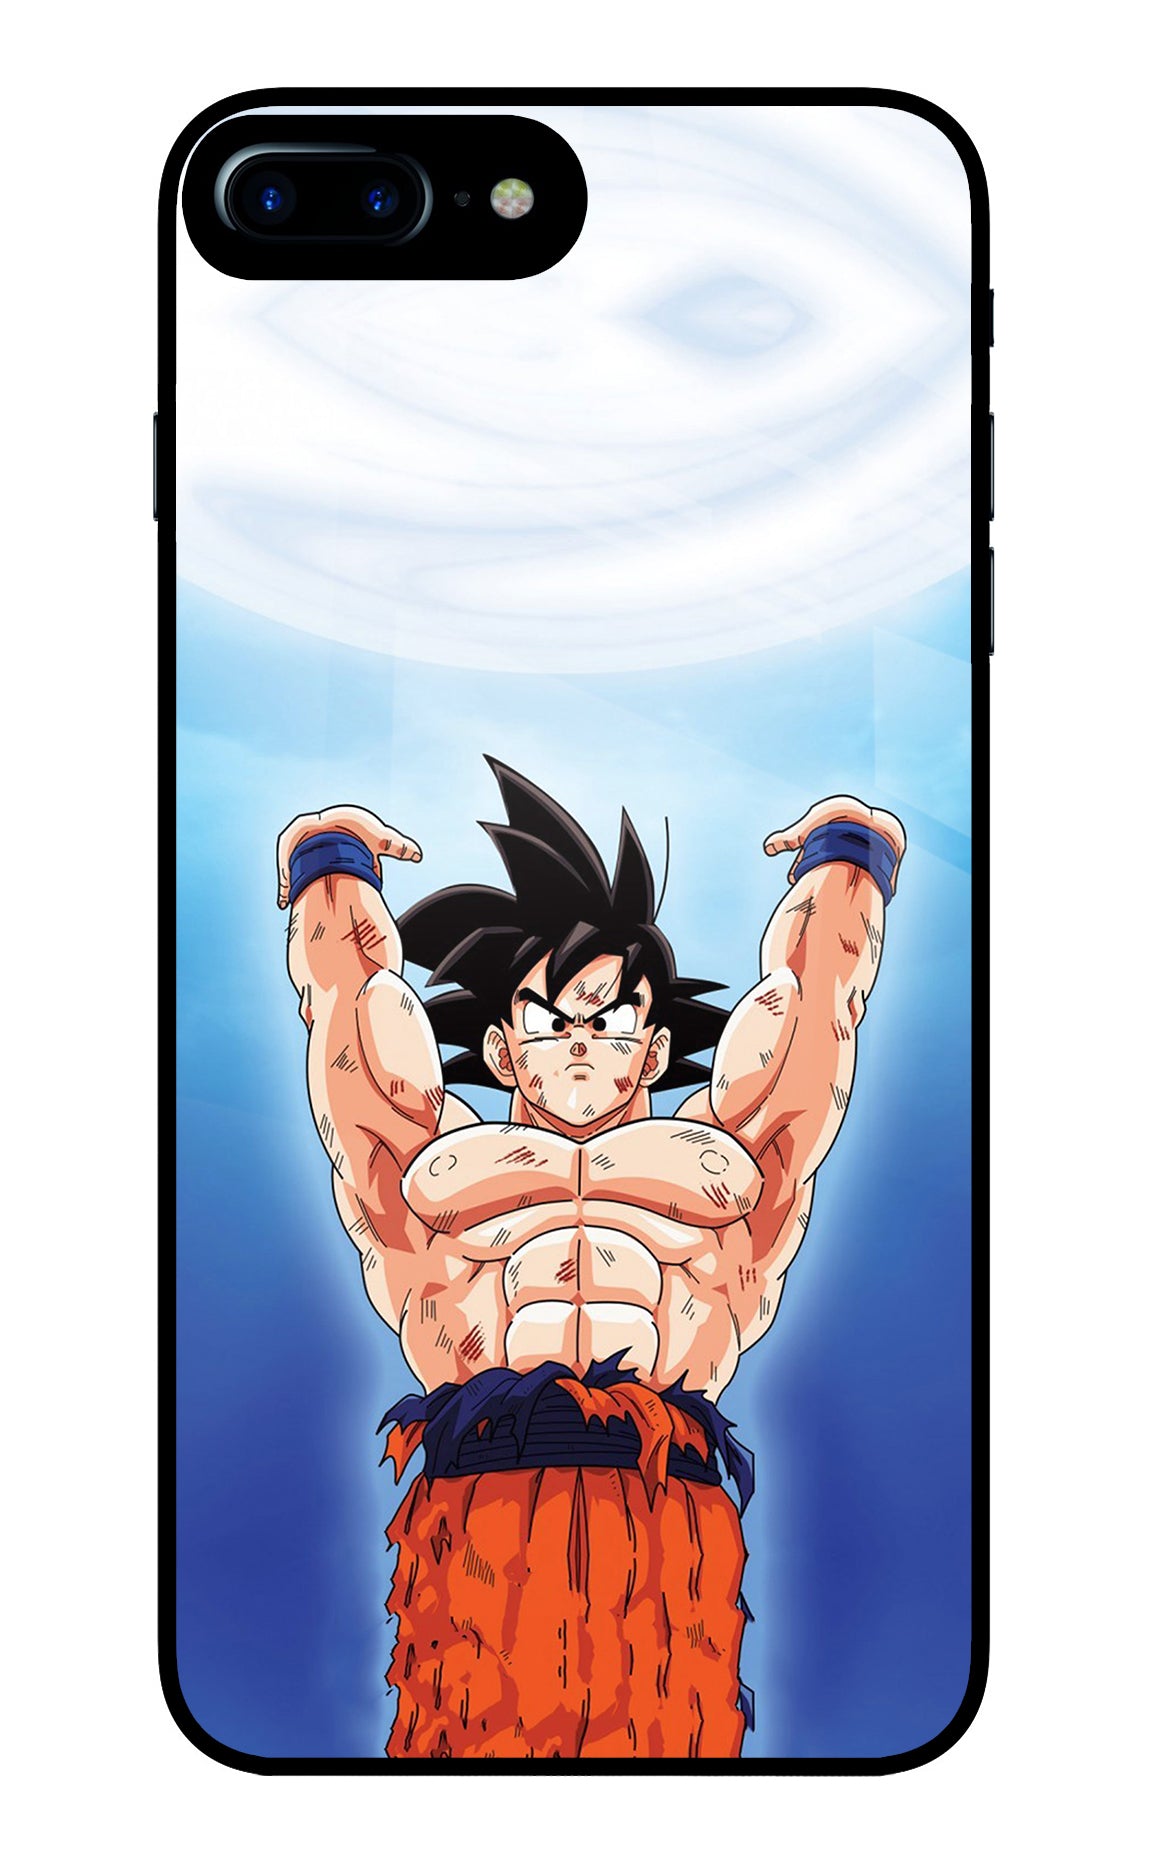 Goku Power iPhone 8 Plus Glass Case